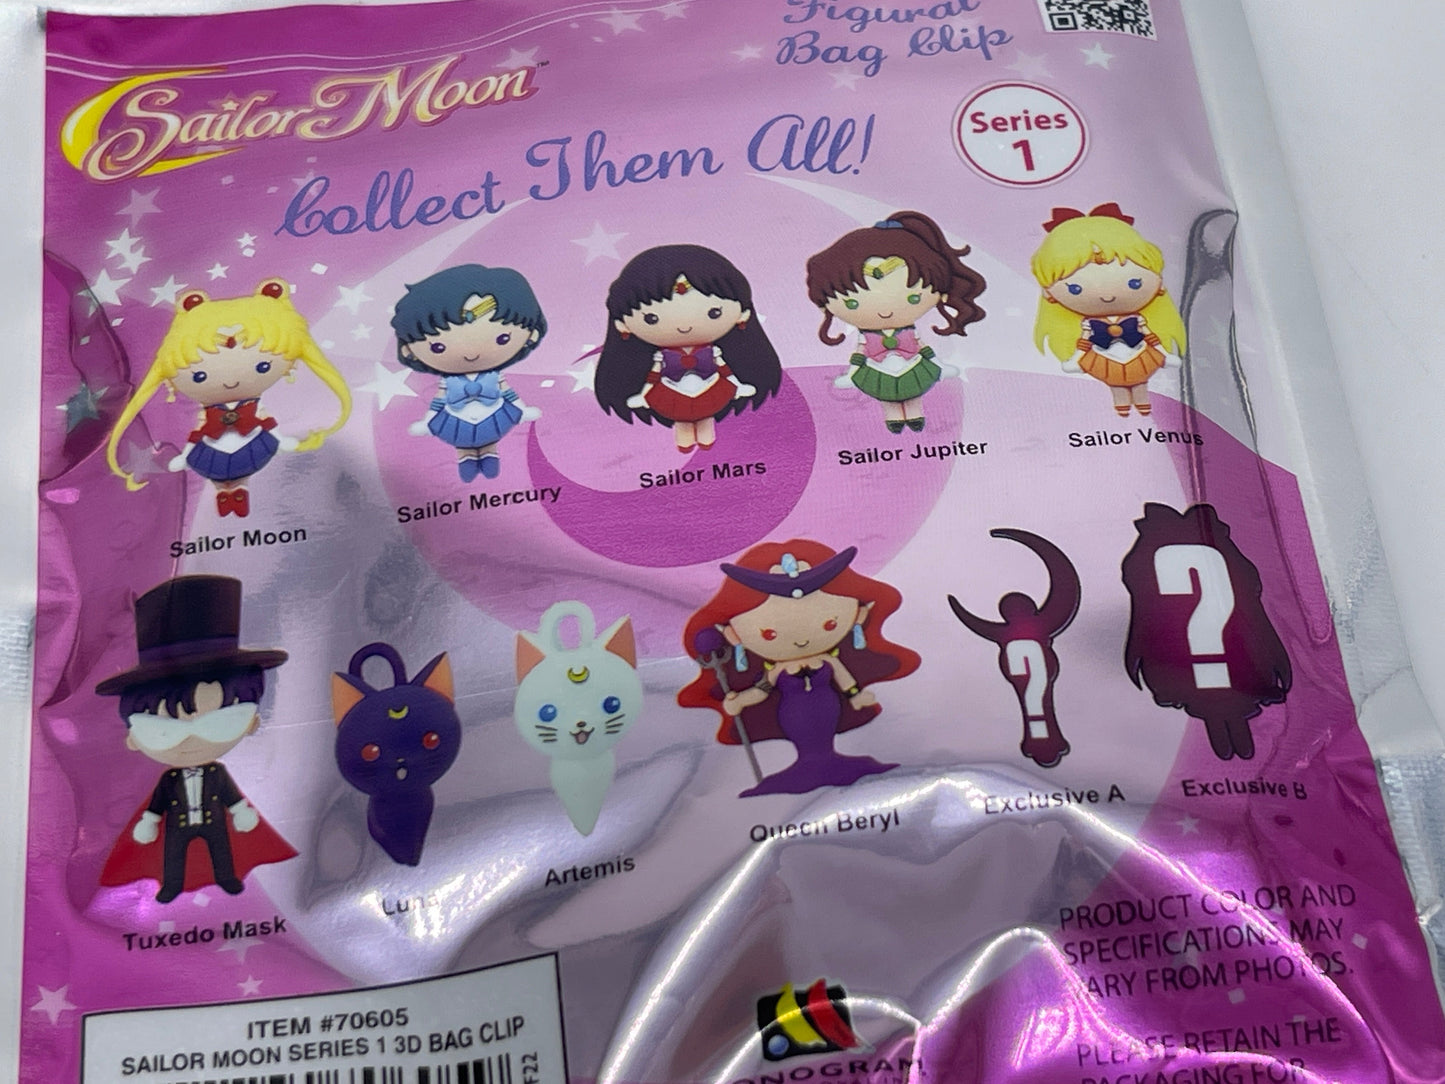 Sailor Moon "Taschenanhänger" 3D Figural Bag Clip Schlüsselanhänger (Monogram)